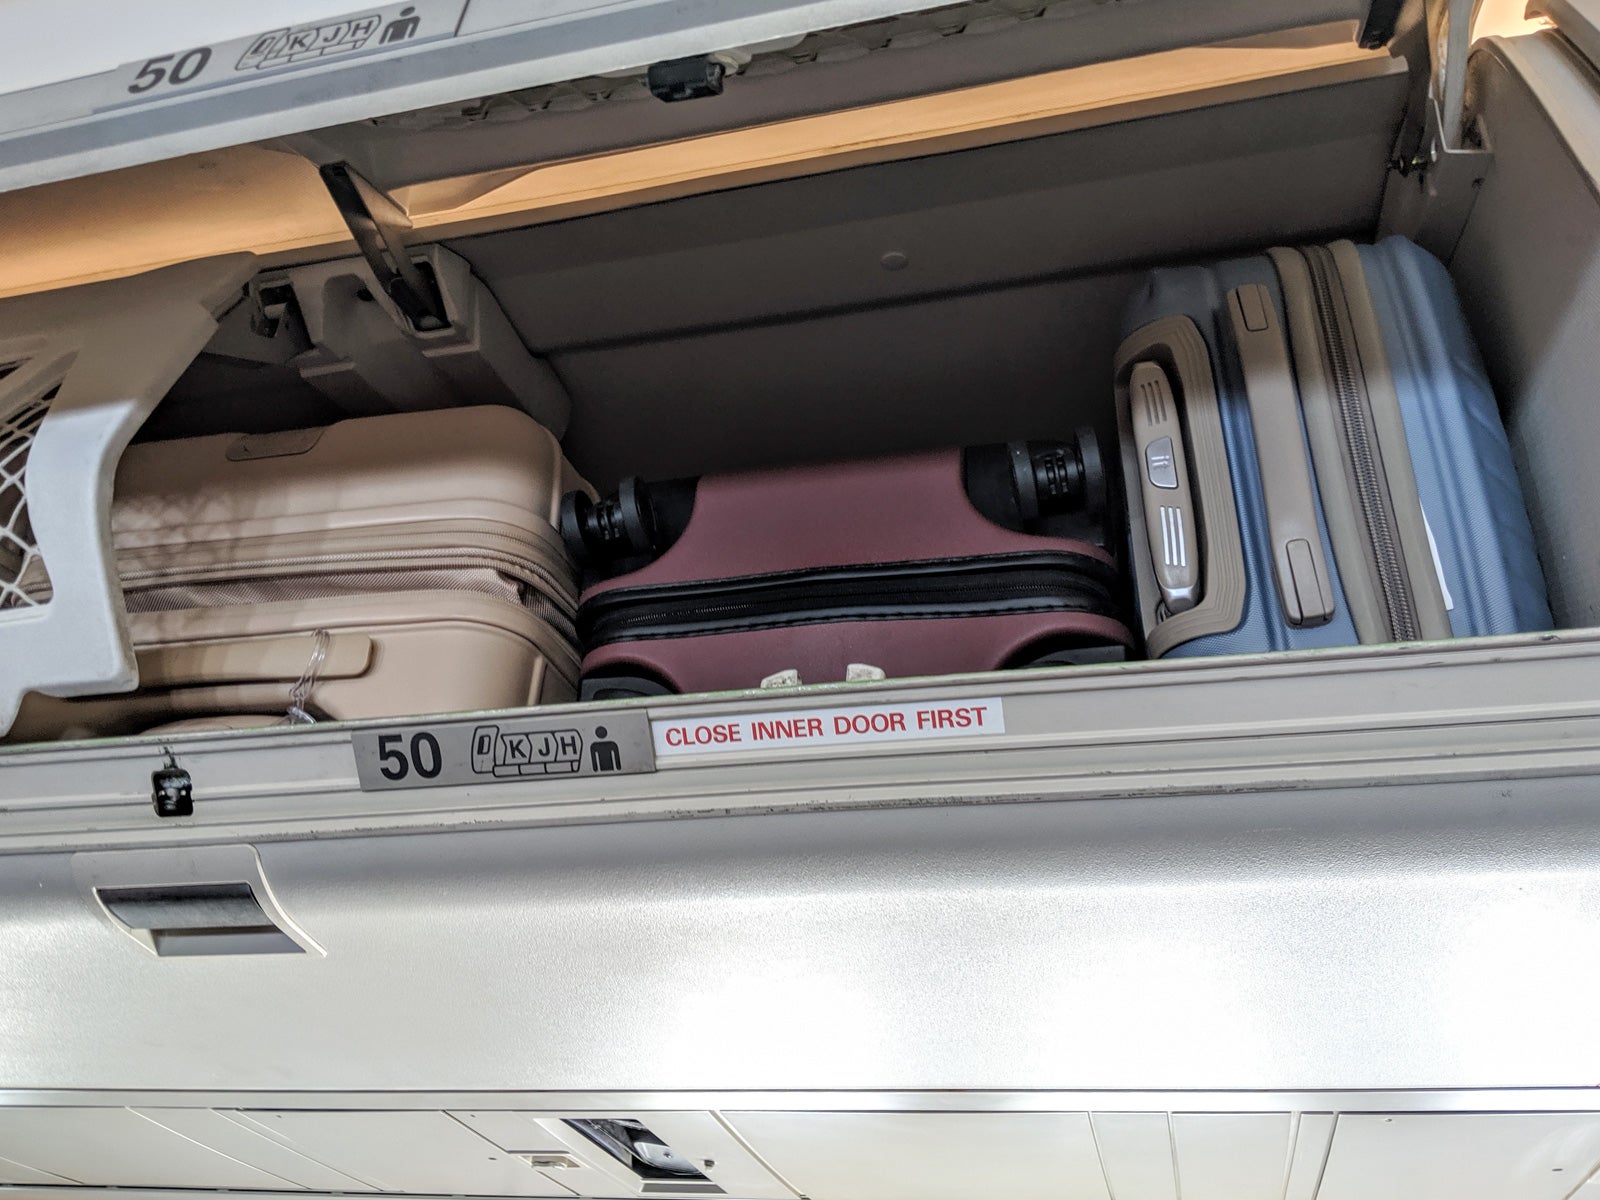 Suitcases in an overhead bin. 